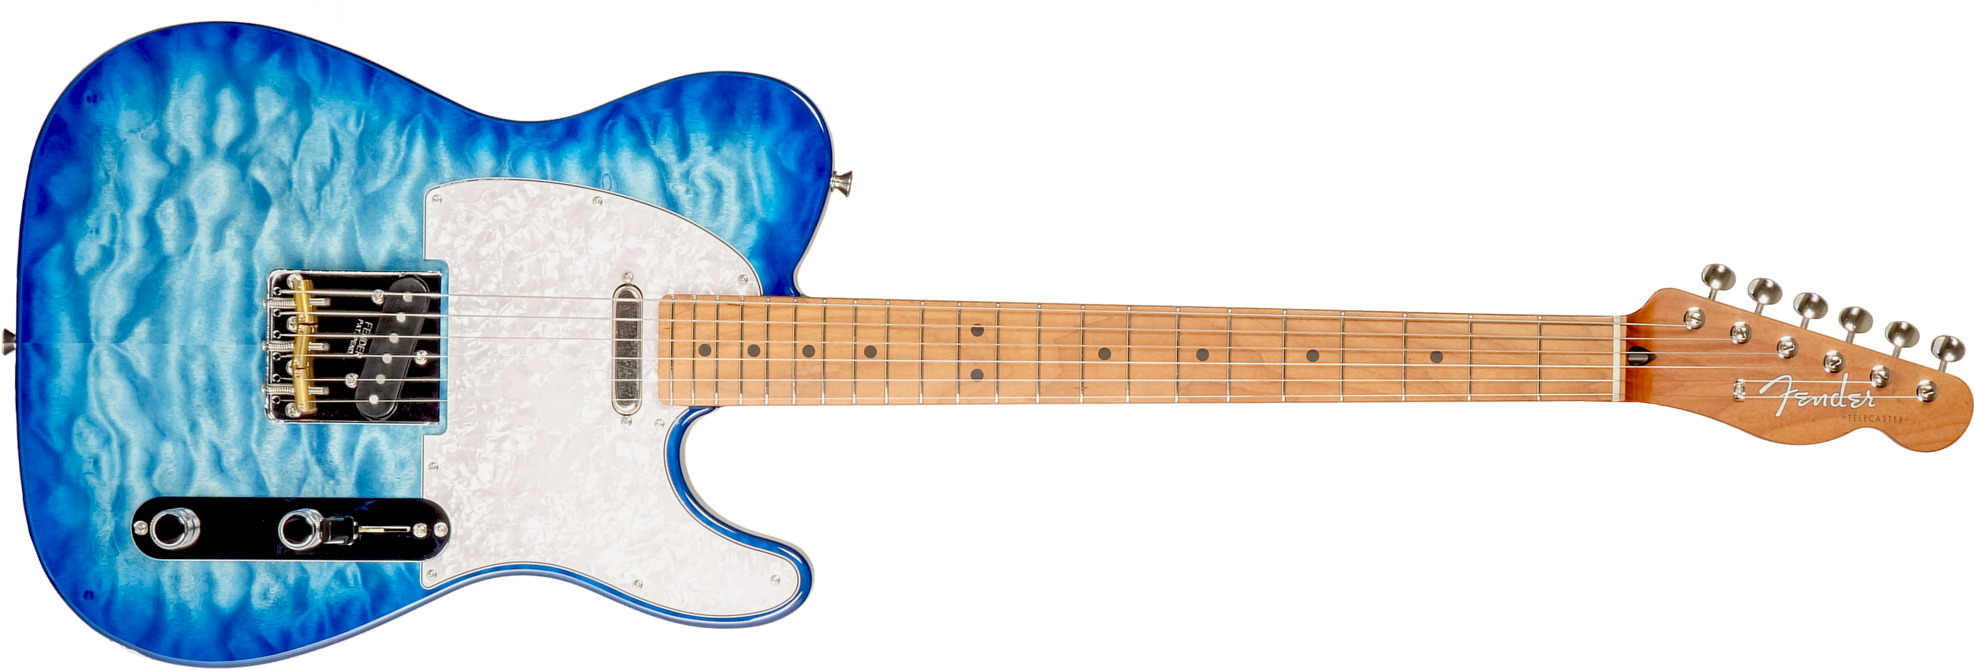 Fender Tele Hybrid Ii Jap 2s Ht Mn - Aqua Blue - Televorm elektrische gitaar - Main picture